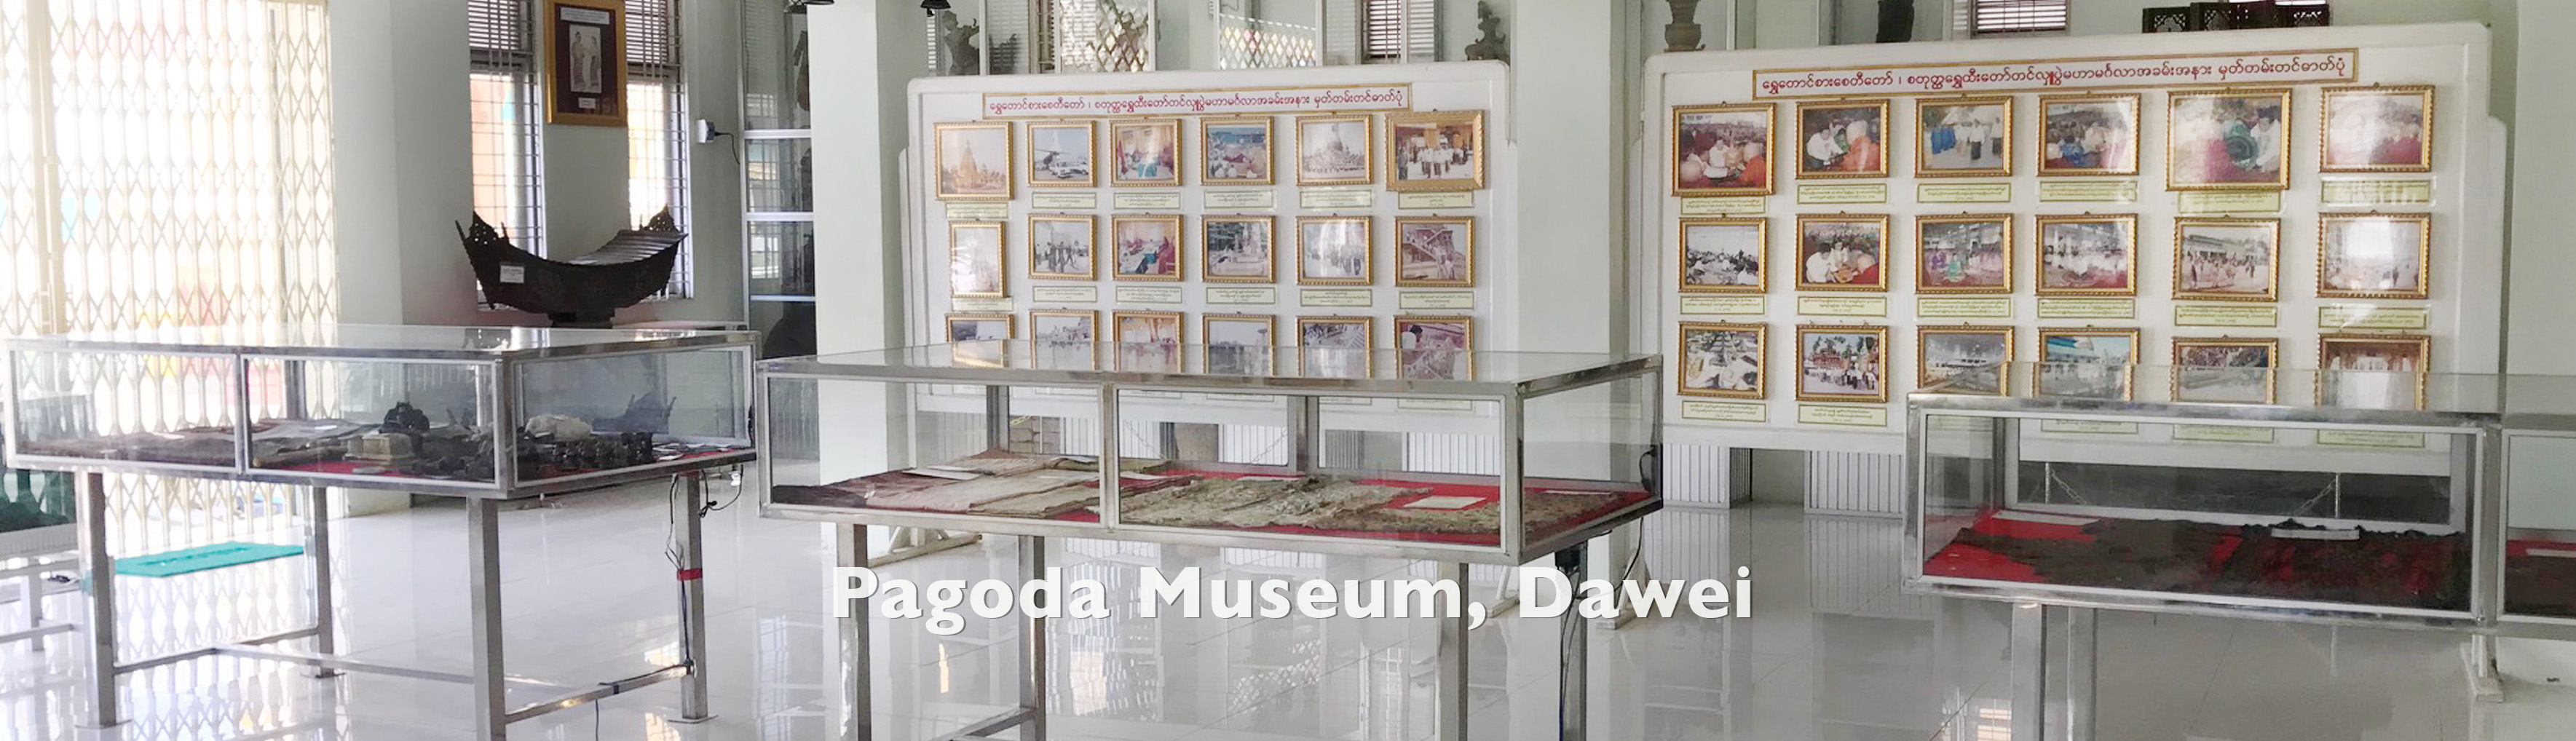 pagoda-museum